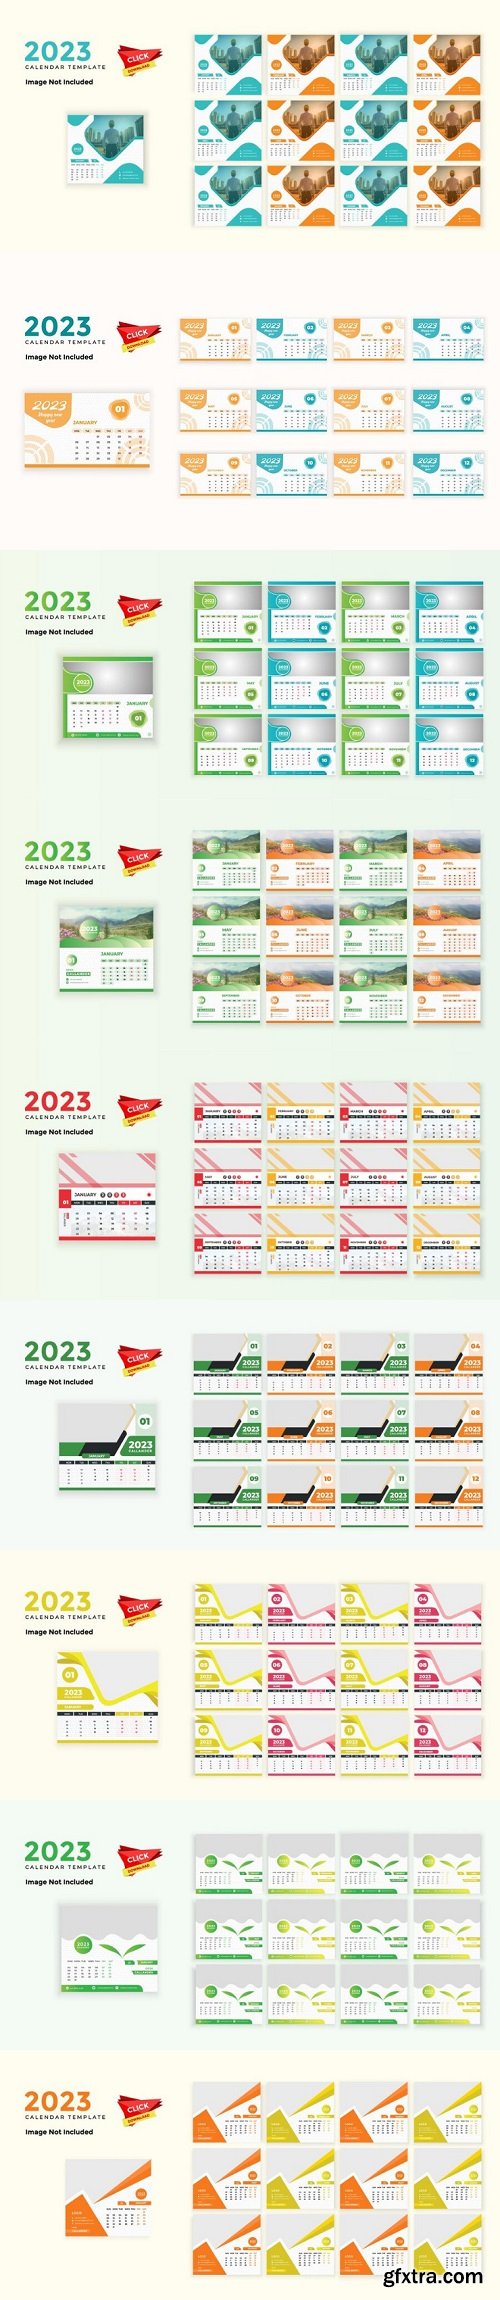 Happy new year 2023 desk calendar design